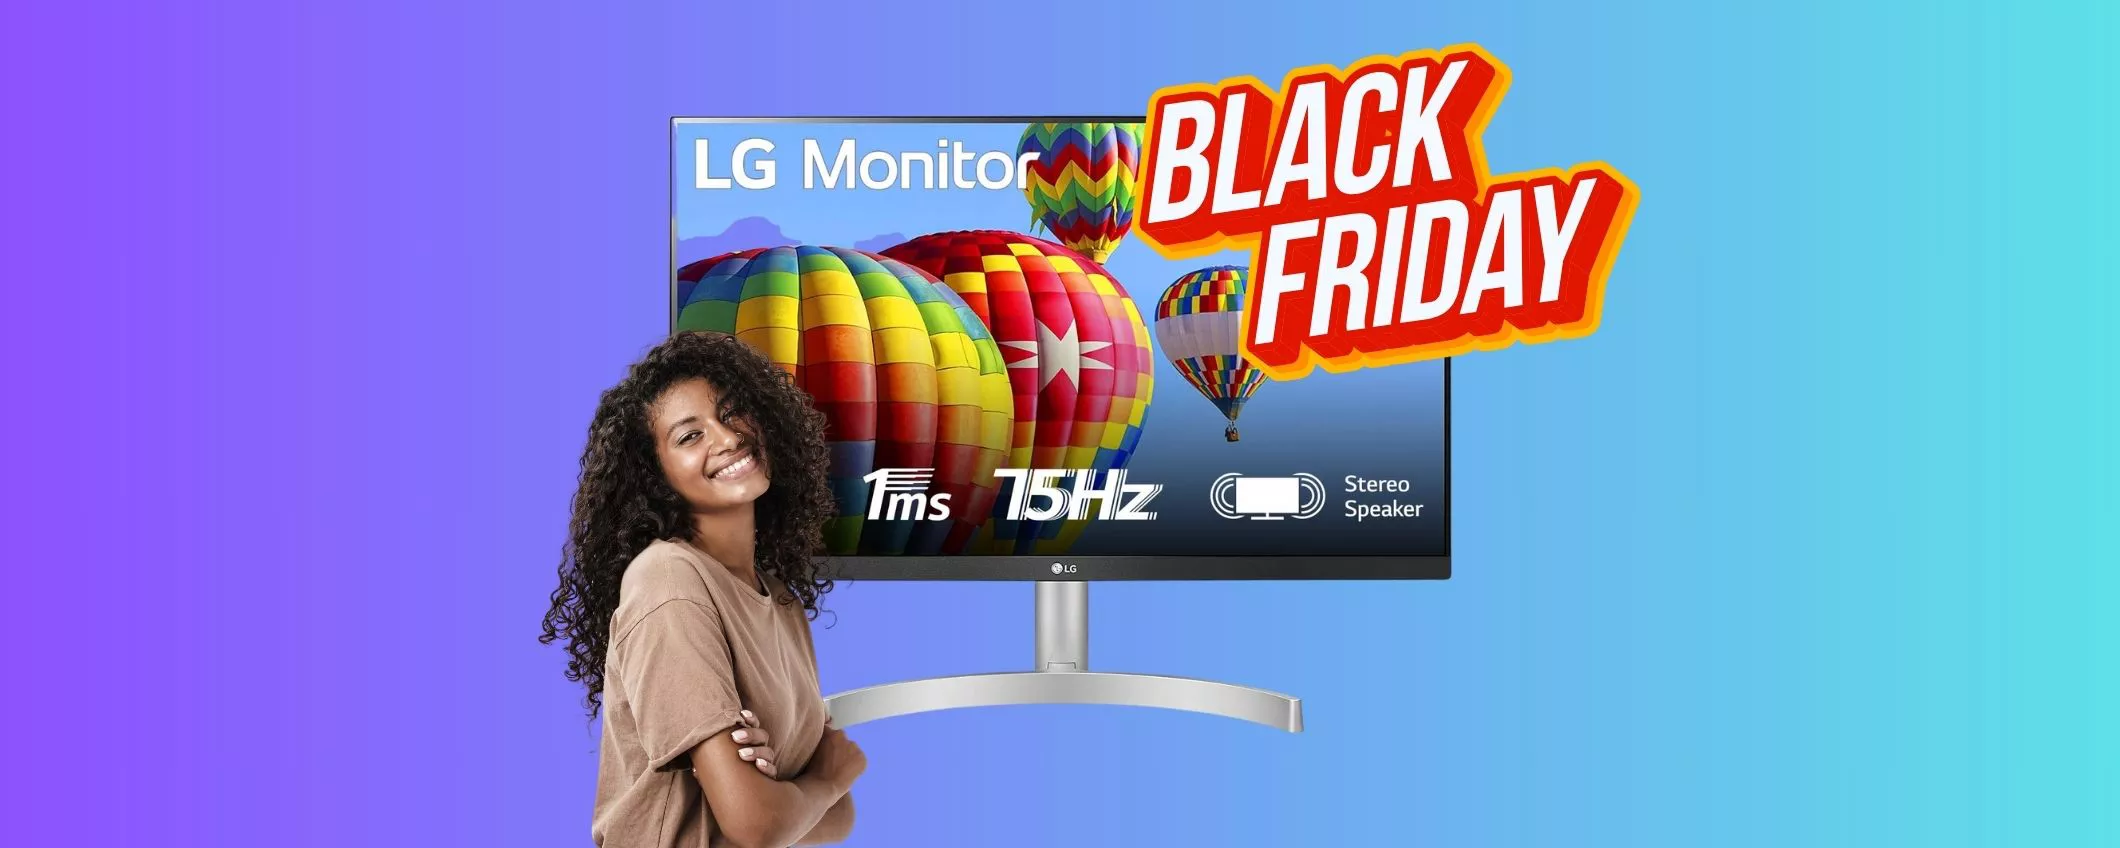 Monitor LG a MENO DI 100€! - Offerta Black Friday!